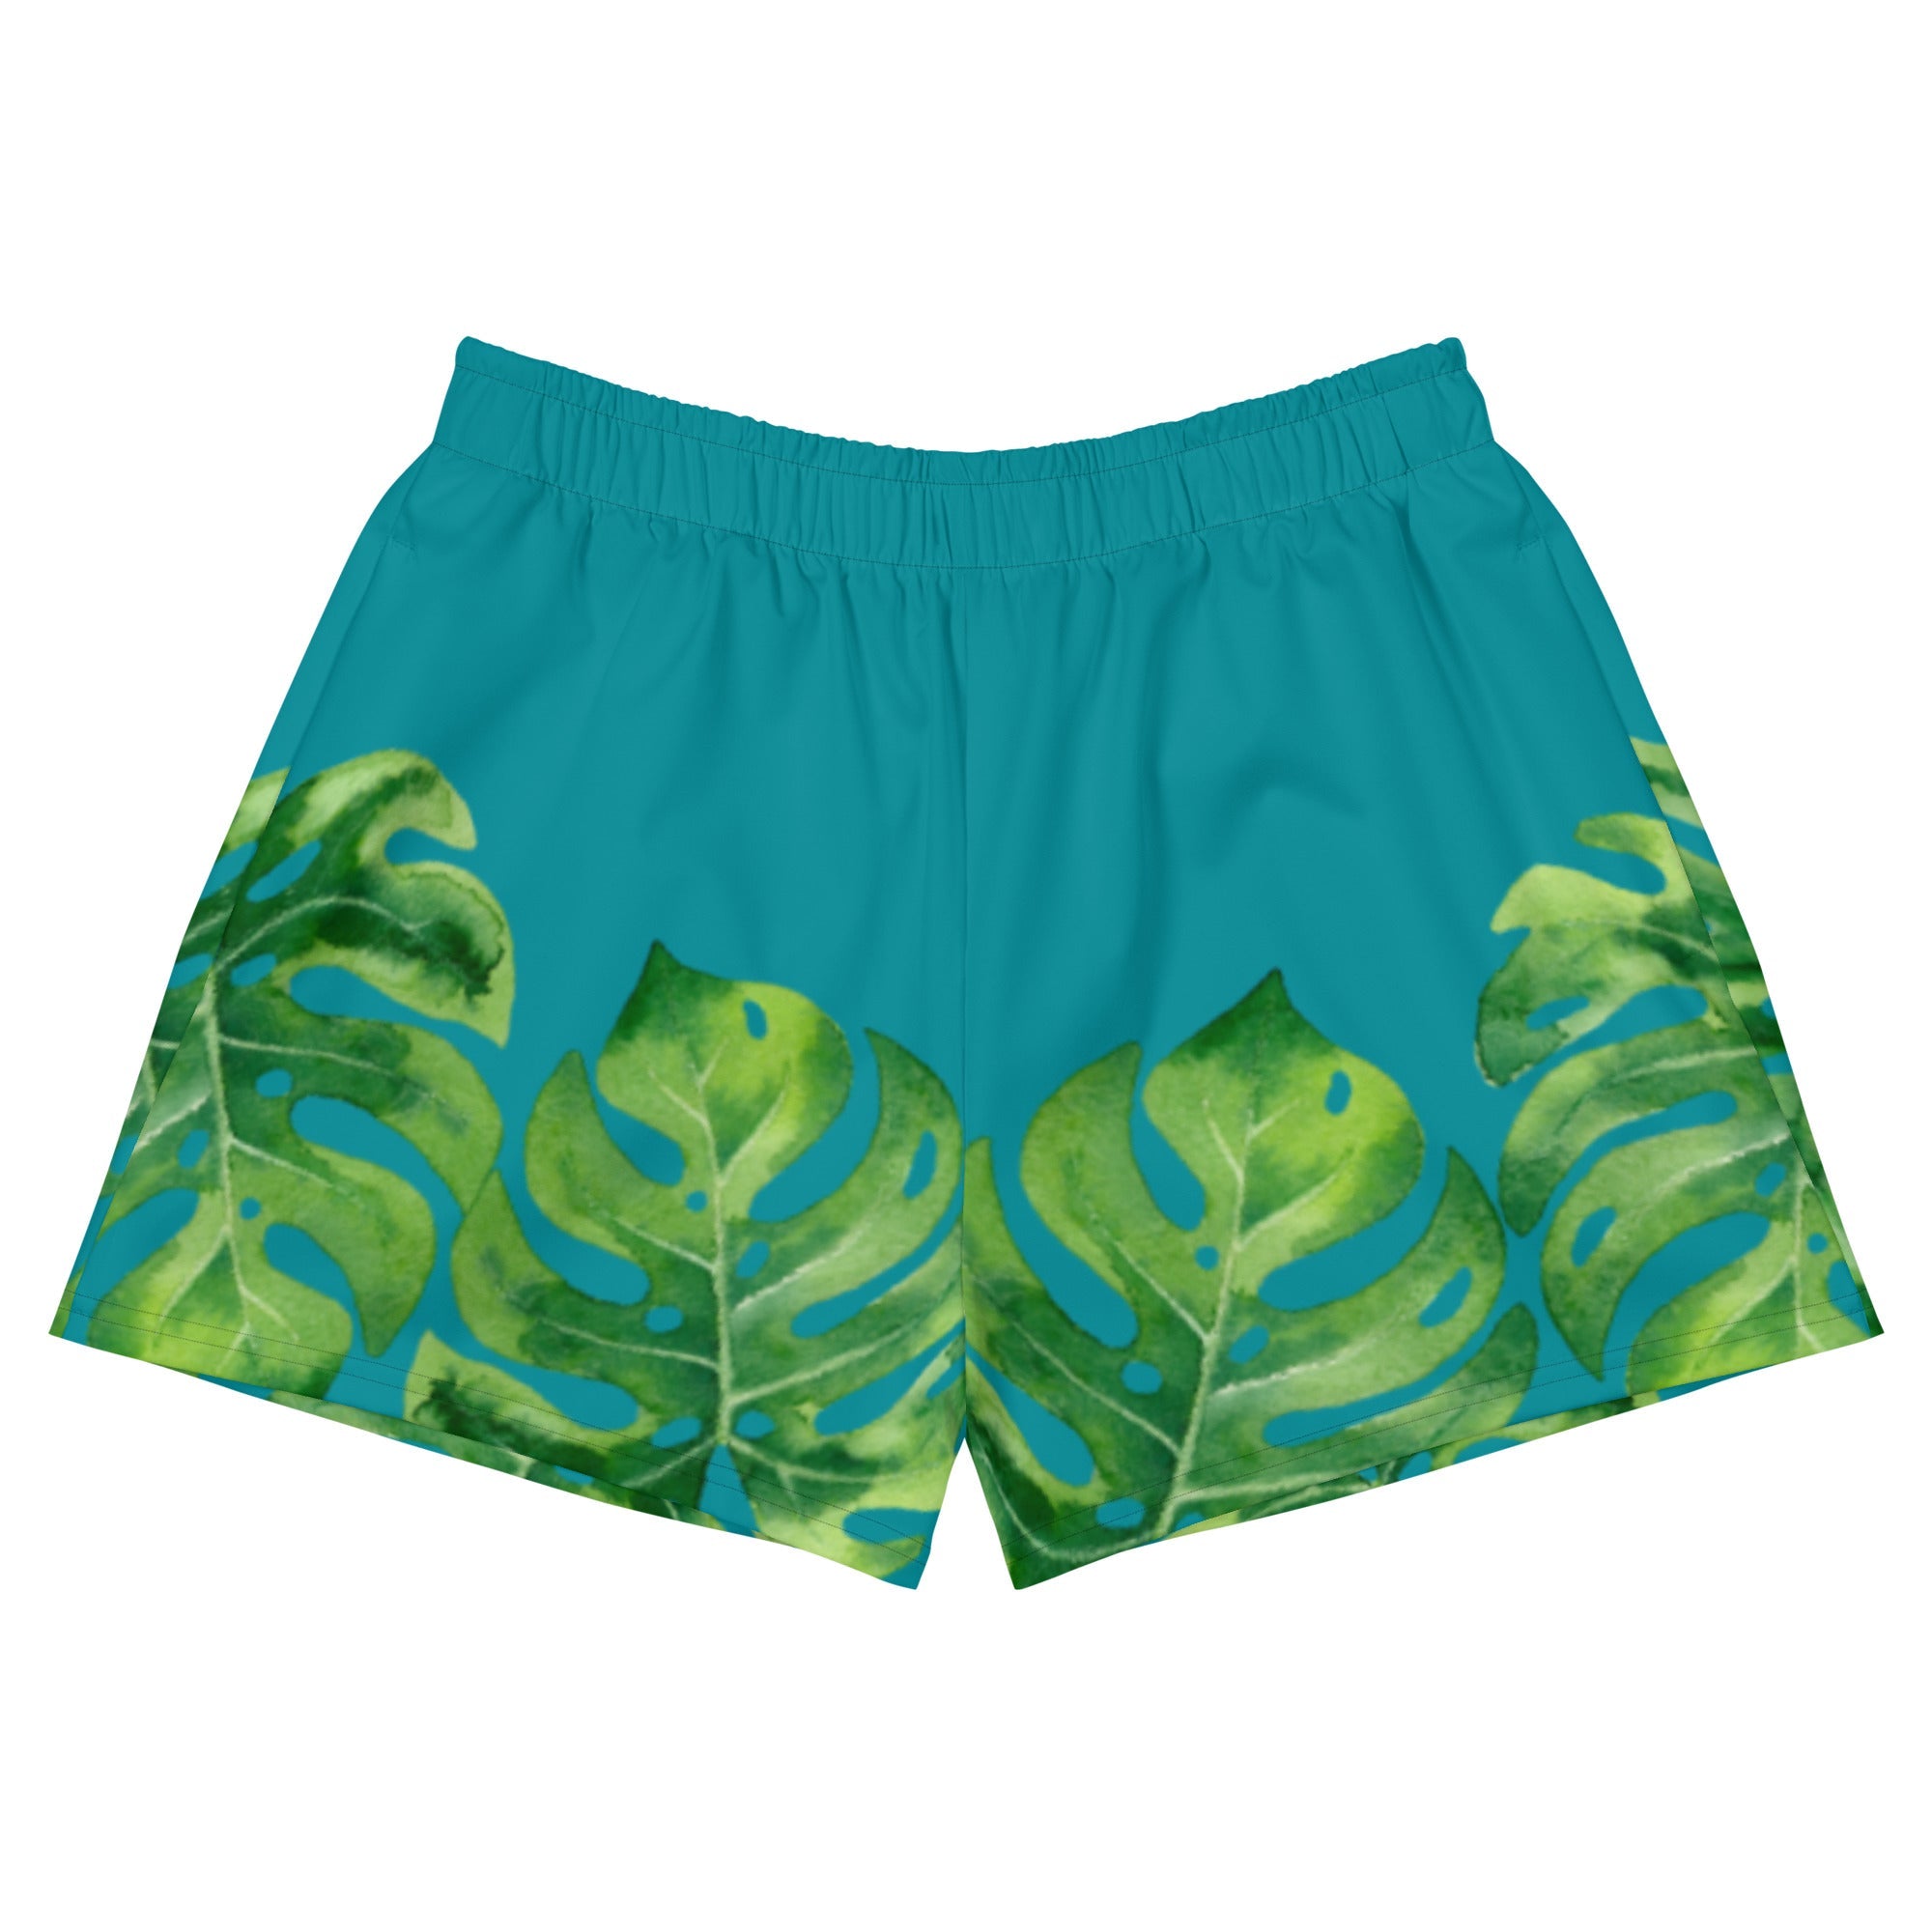 Recycelte Sport-Shorts für Damen Monstera Grün/Petrol - earlyfish